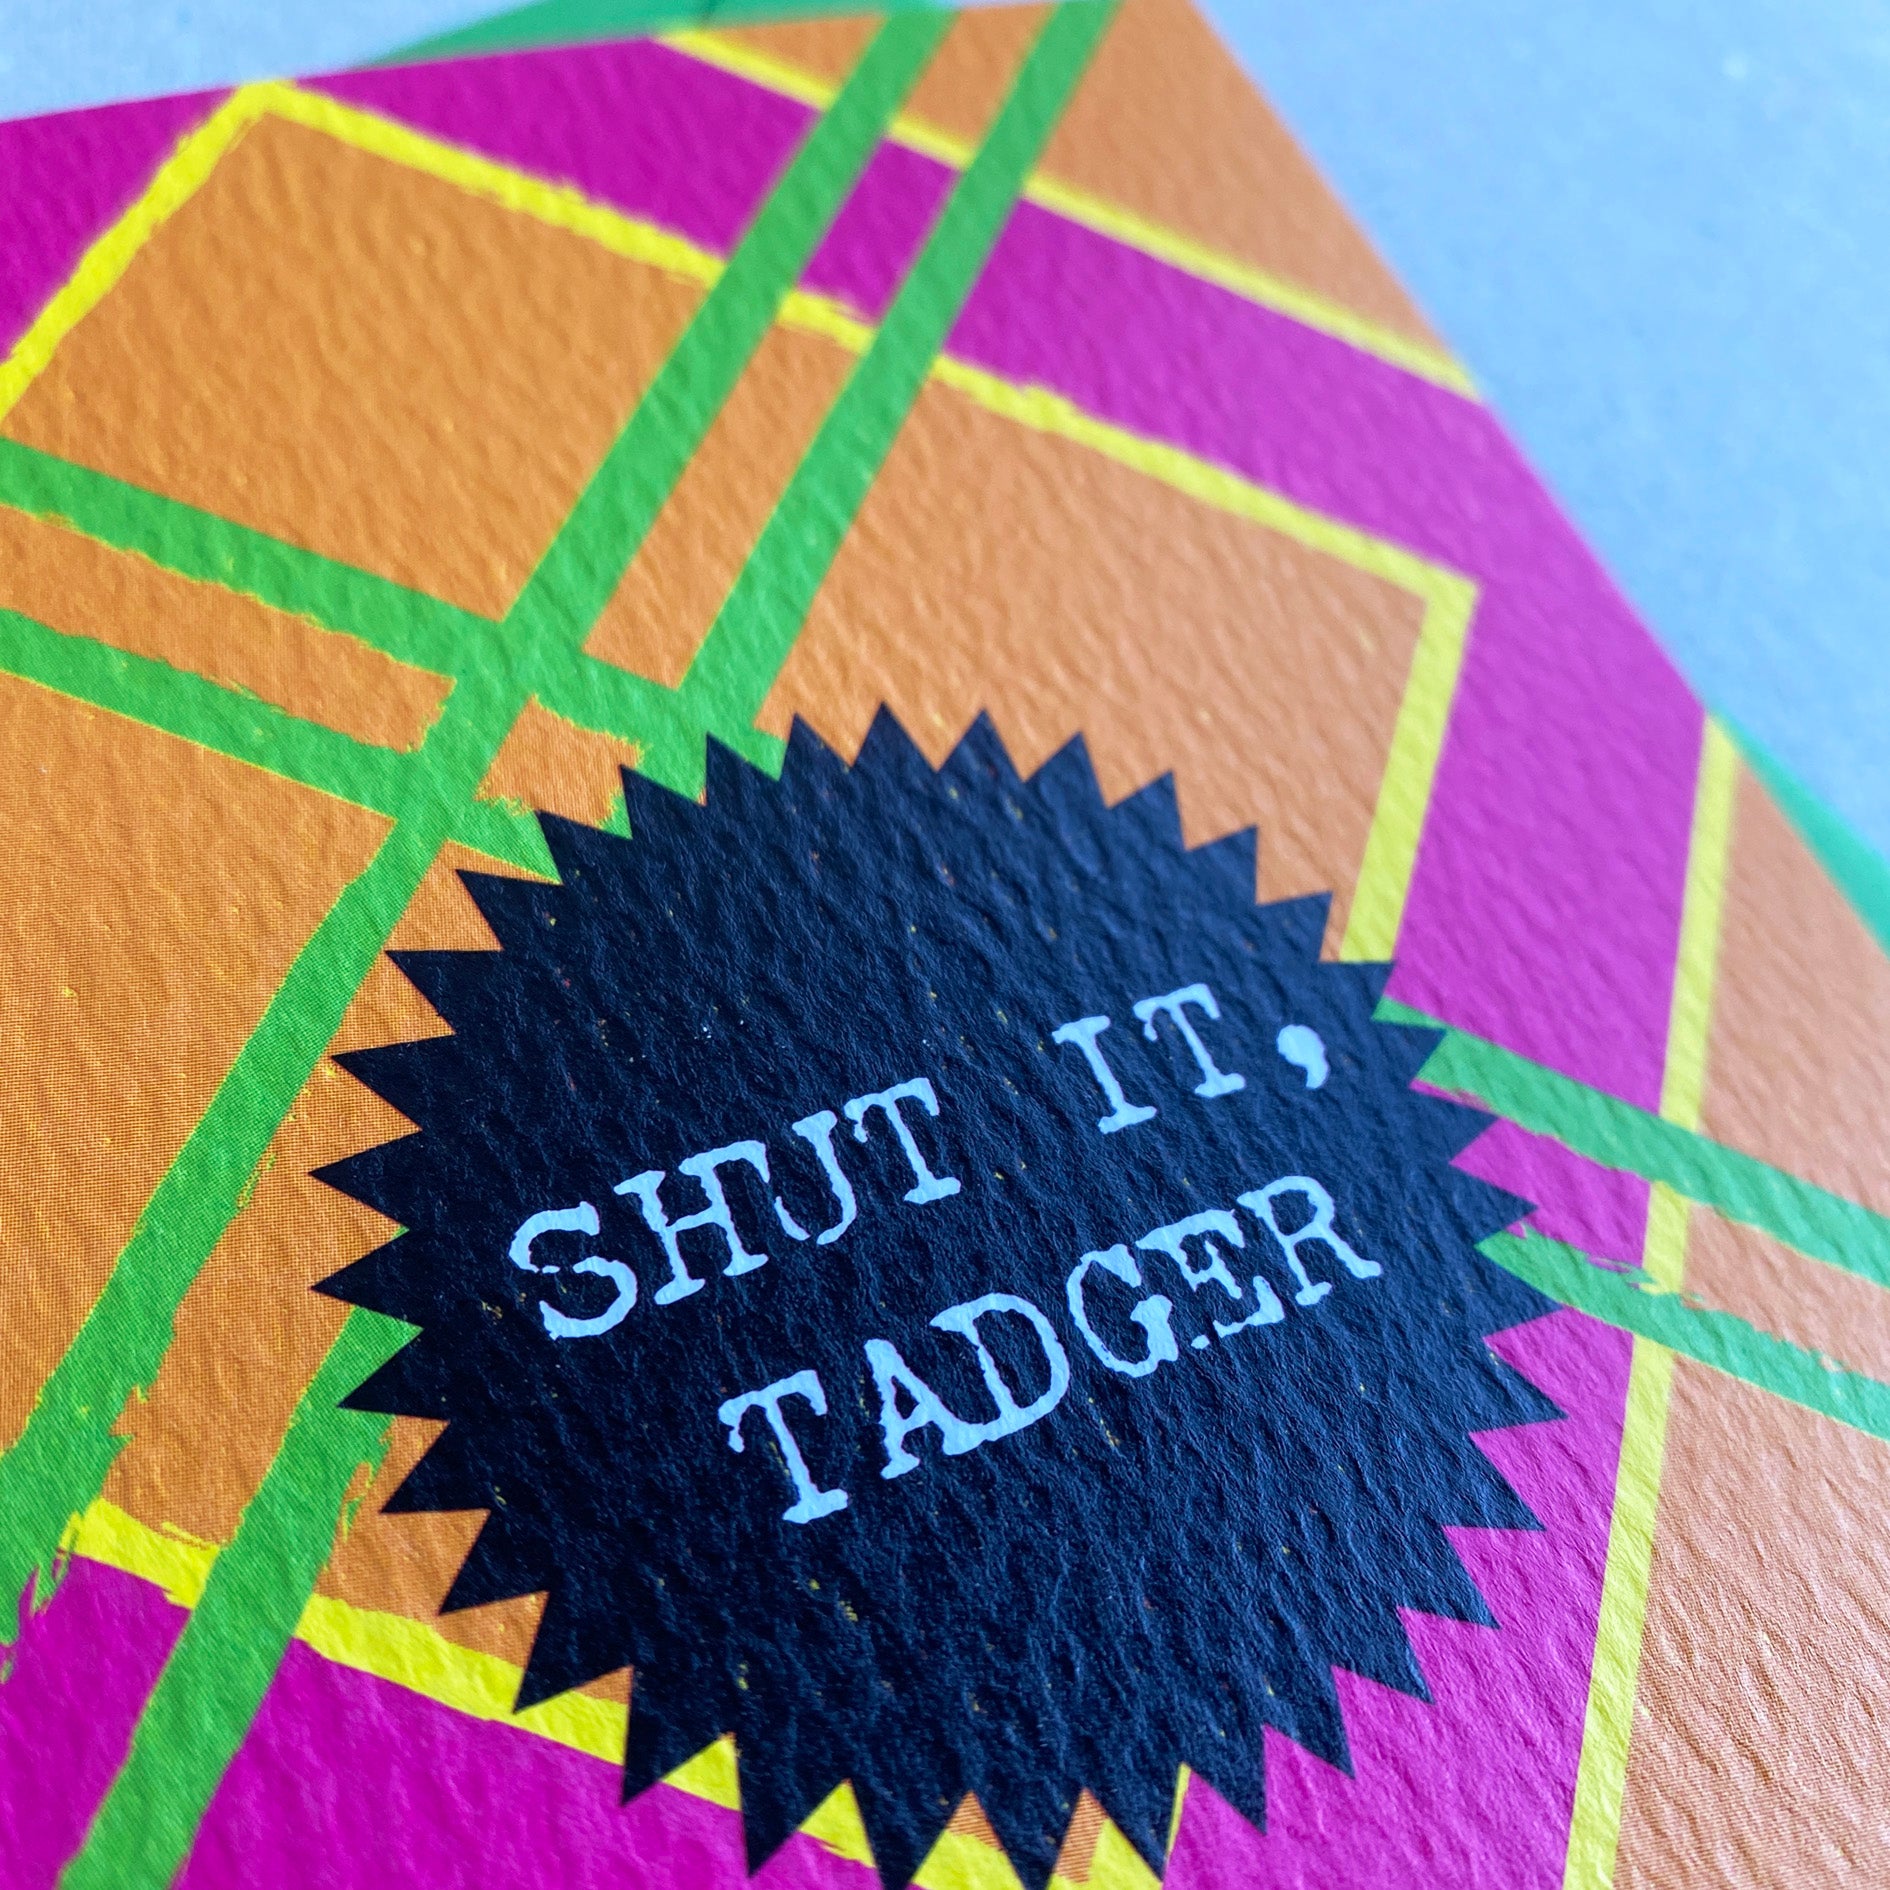 'Shut It Tadger' Funny Scottish Insult Card - HiyaPal